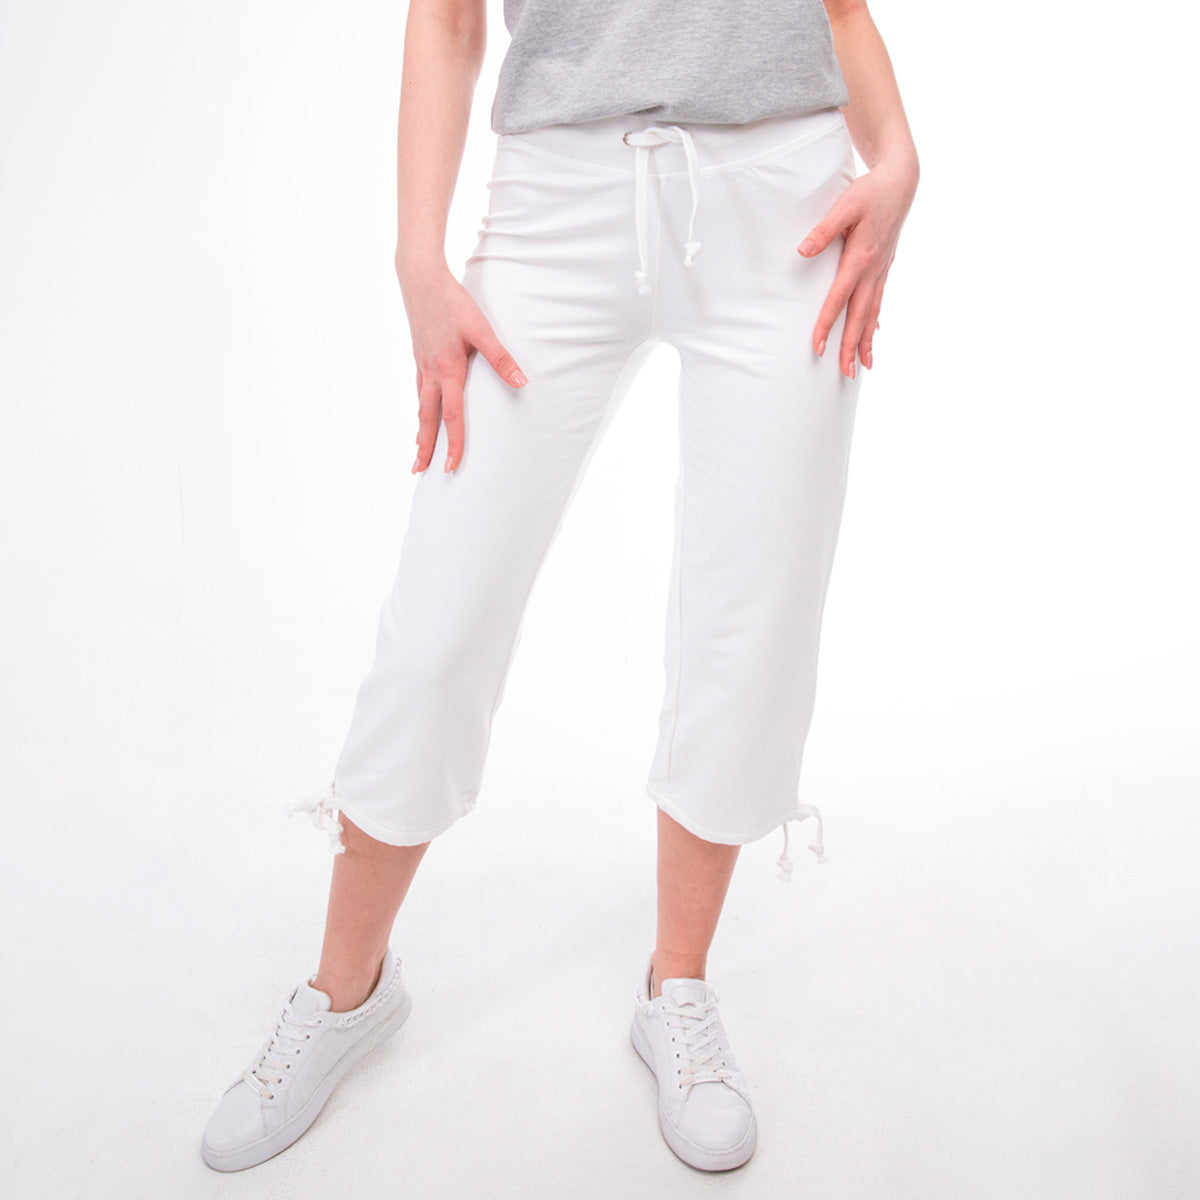 donna-conny-cotone organico-34-pantaloni-bianco-zoomin